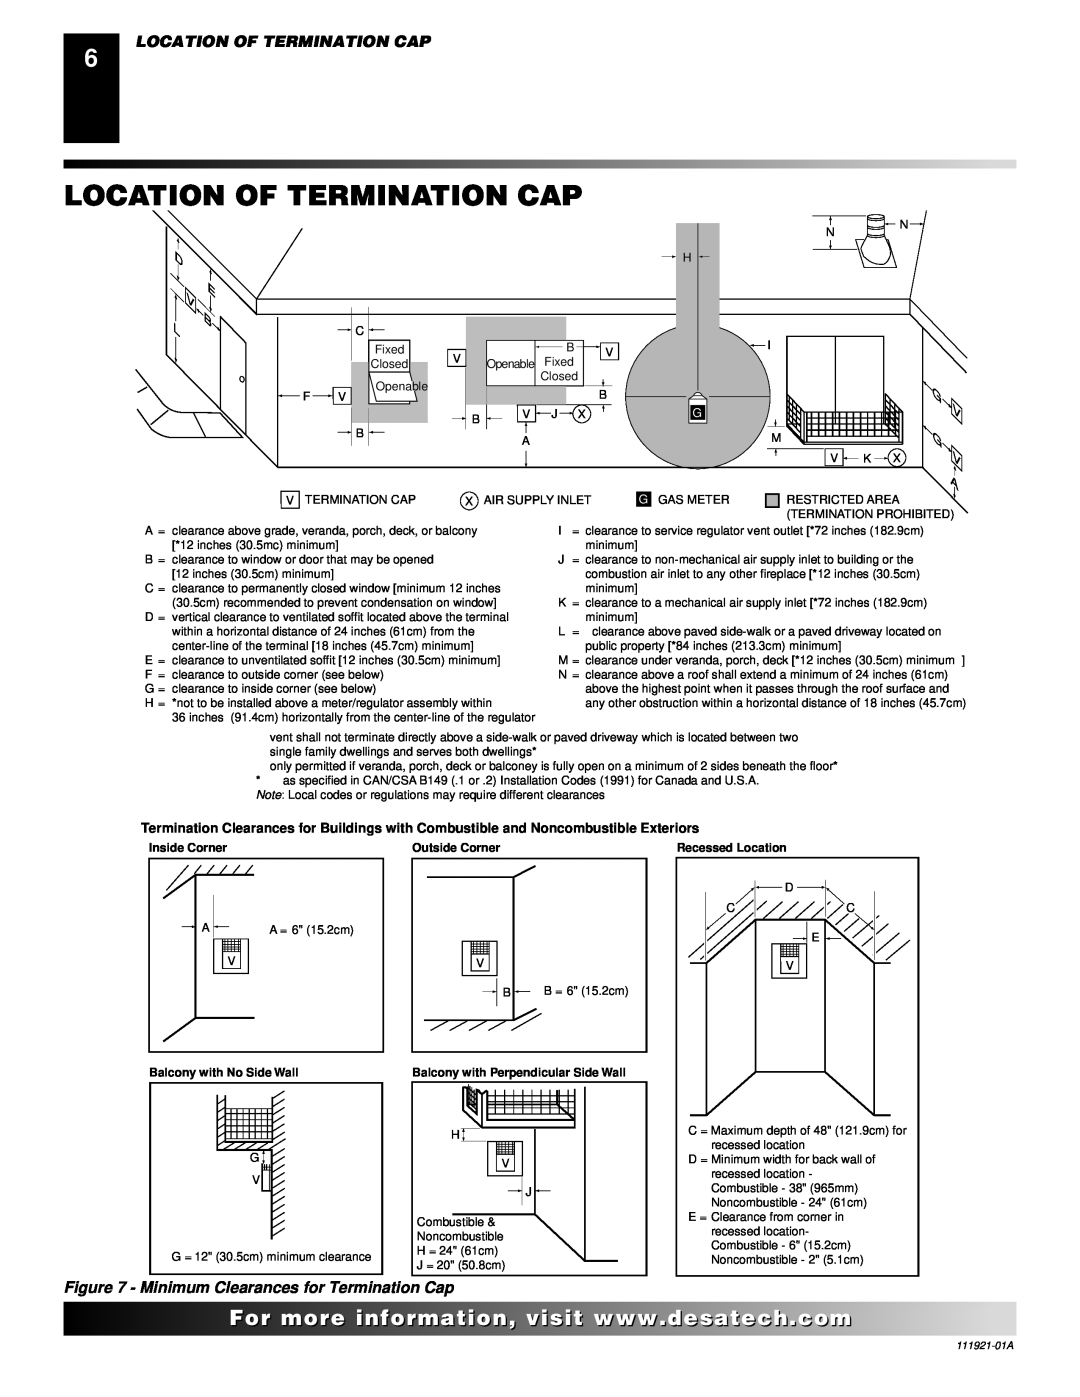 Desa (V)K42N Location Of Termination Cap, D E B L, V G V A, Minimum Clearances for Termination Cap, Inside Corner 